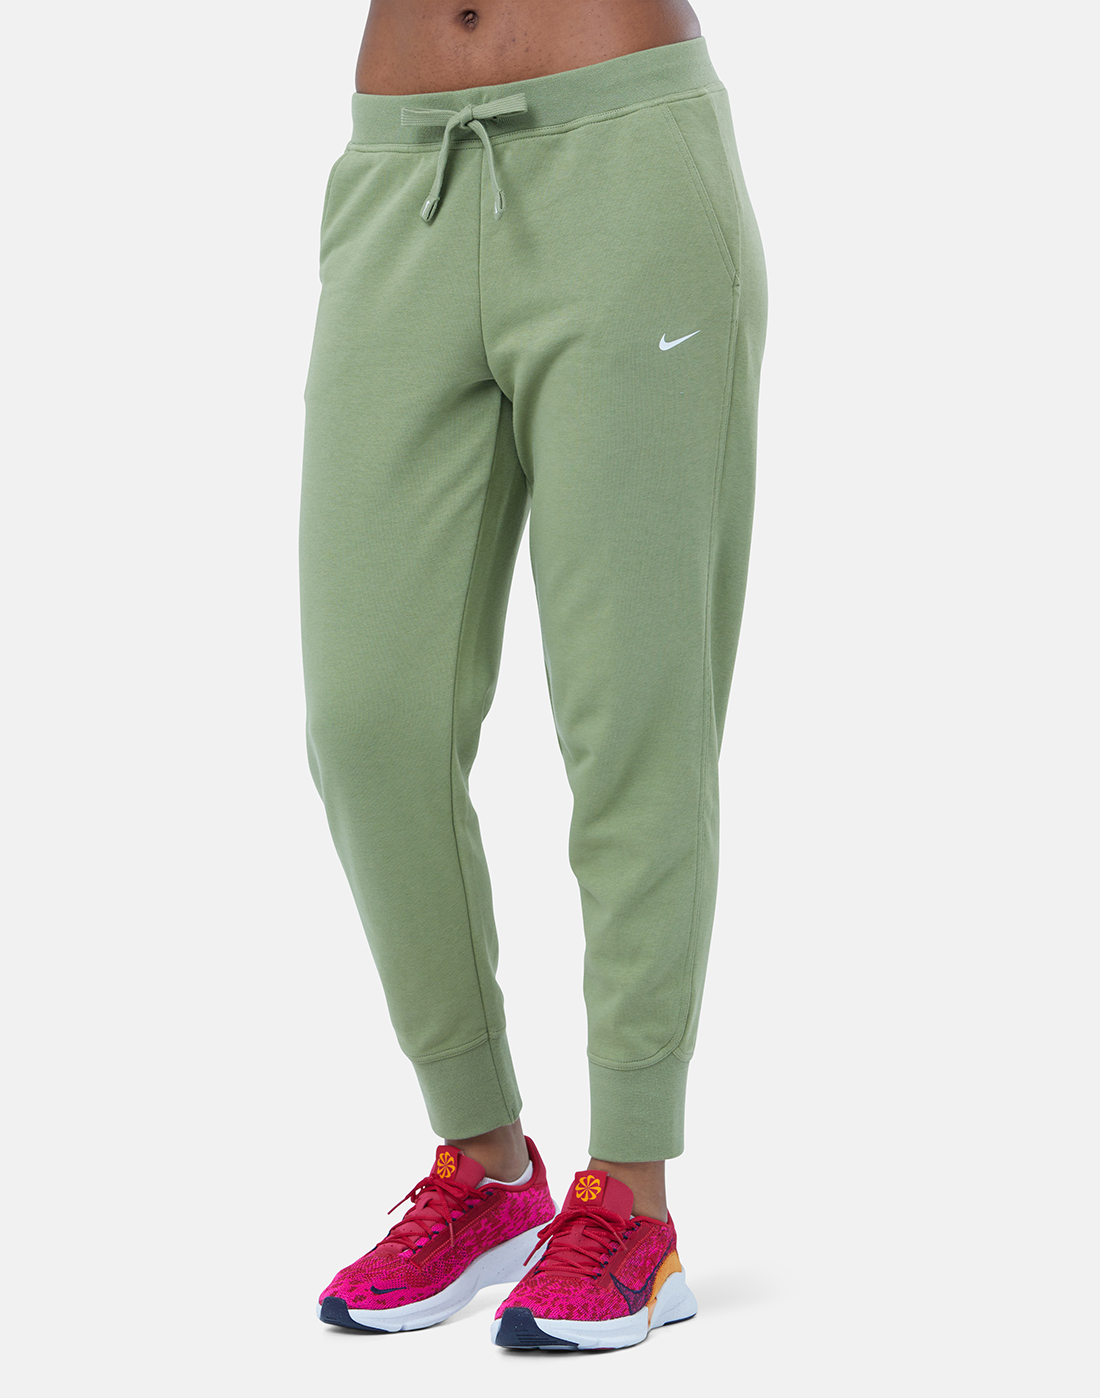 Nike Womens Get Fit Pants - Green